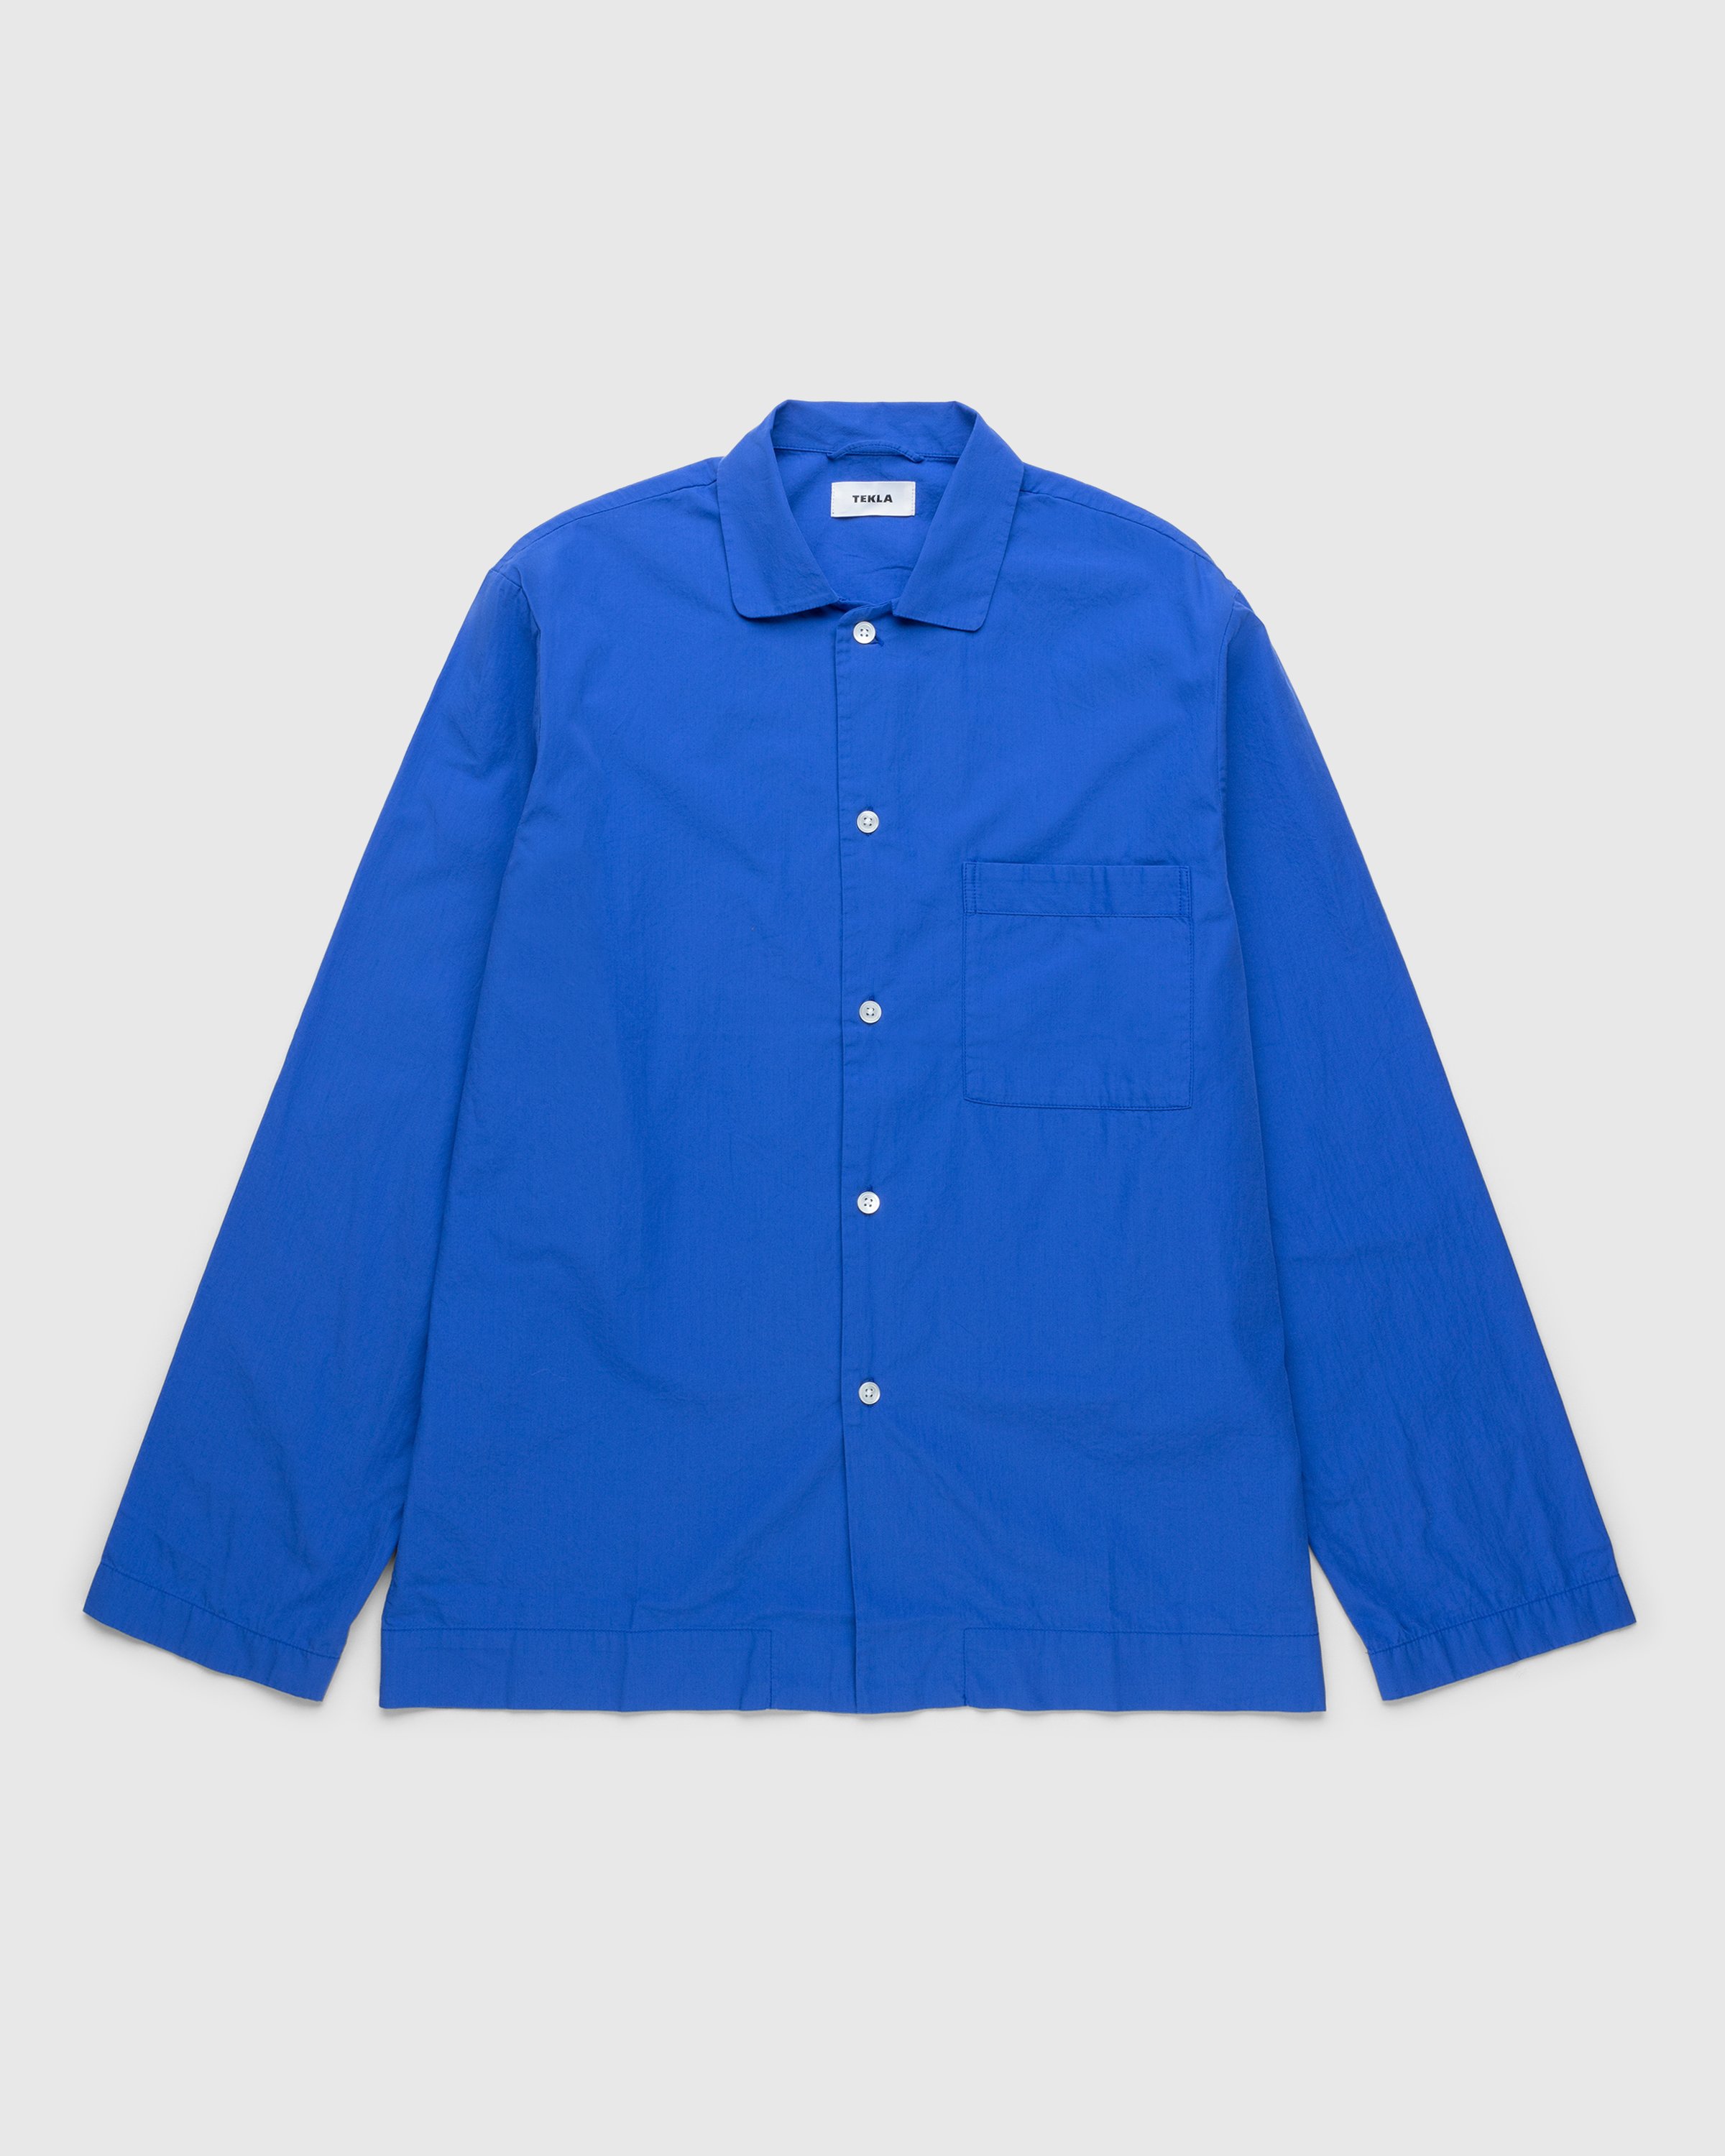 Tekla - Cotton Poplin Pyjamas Shirt Royal Blue - Clothing - Blue - Image 1